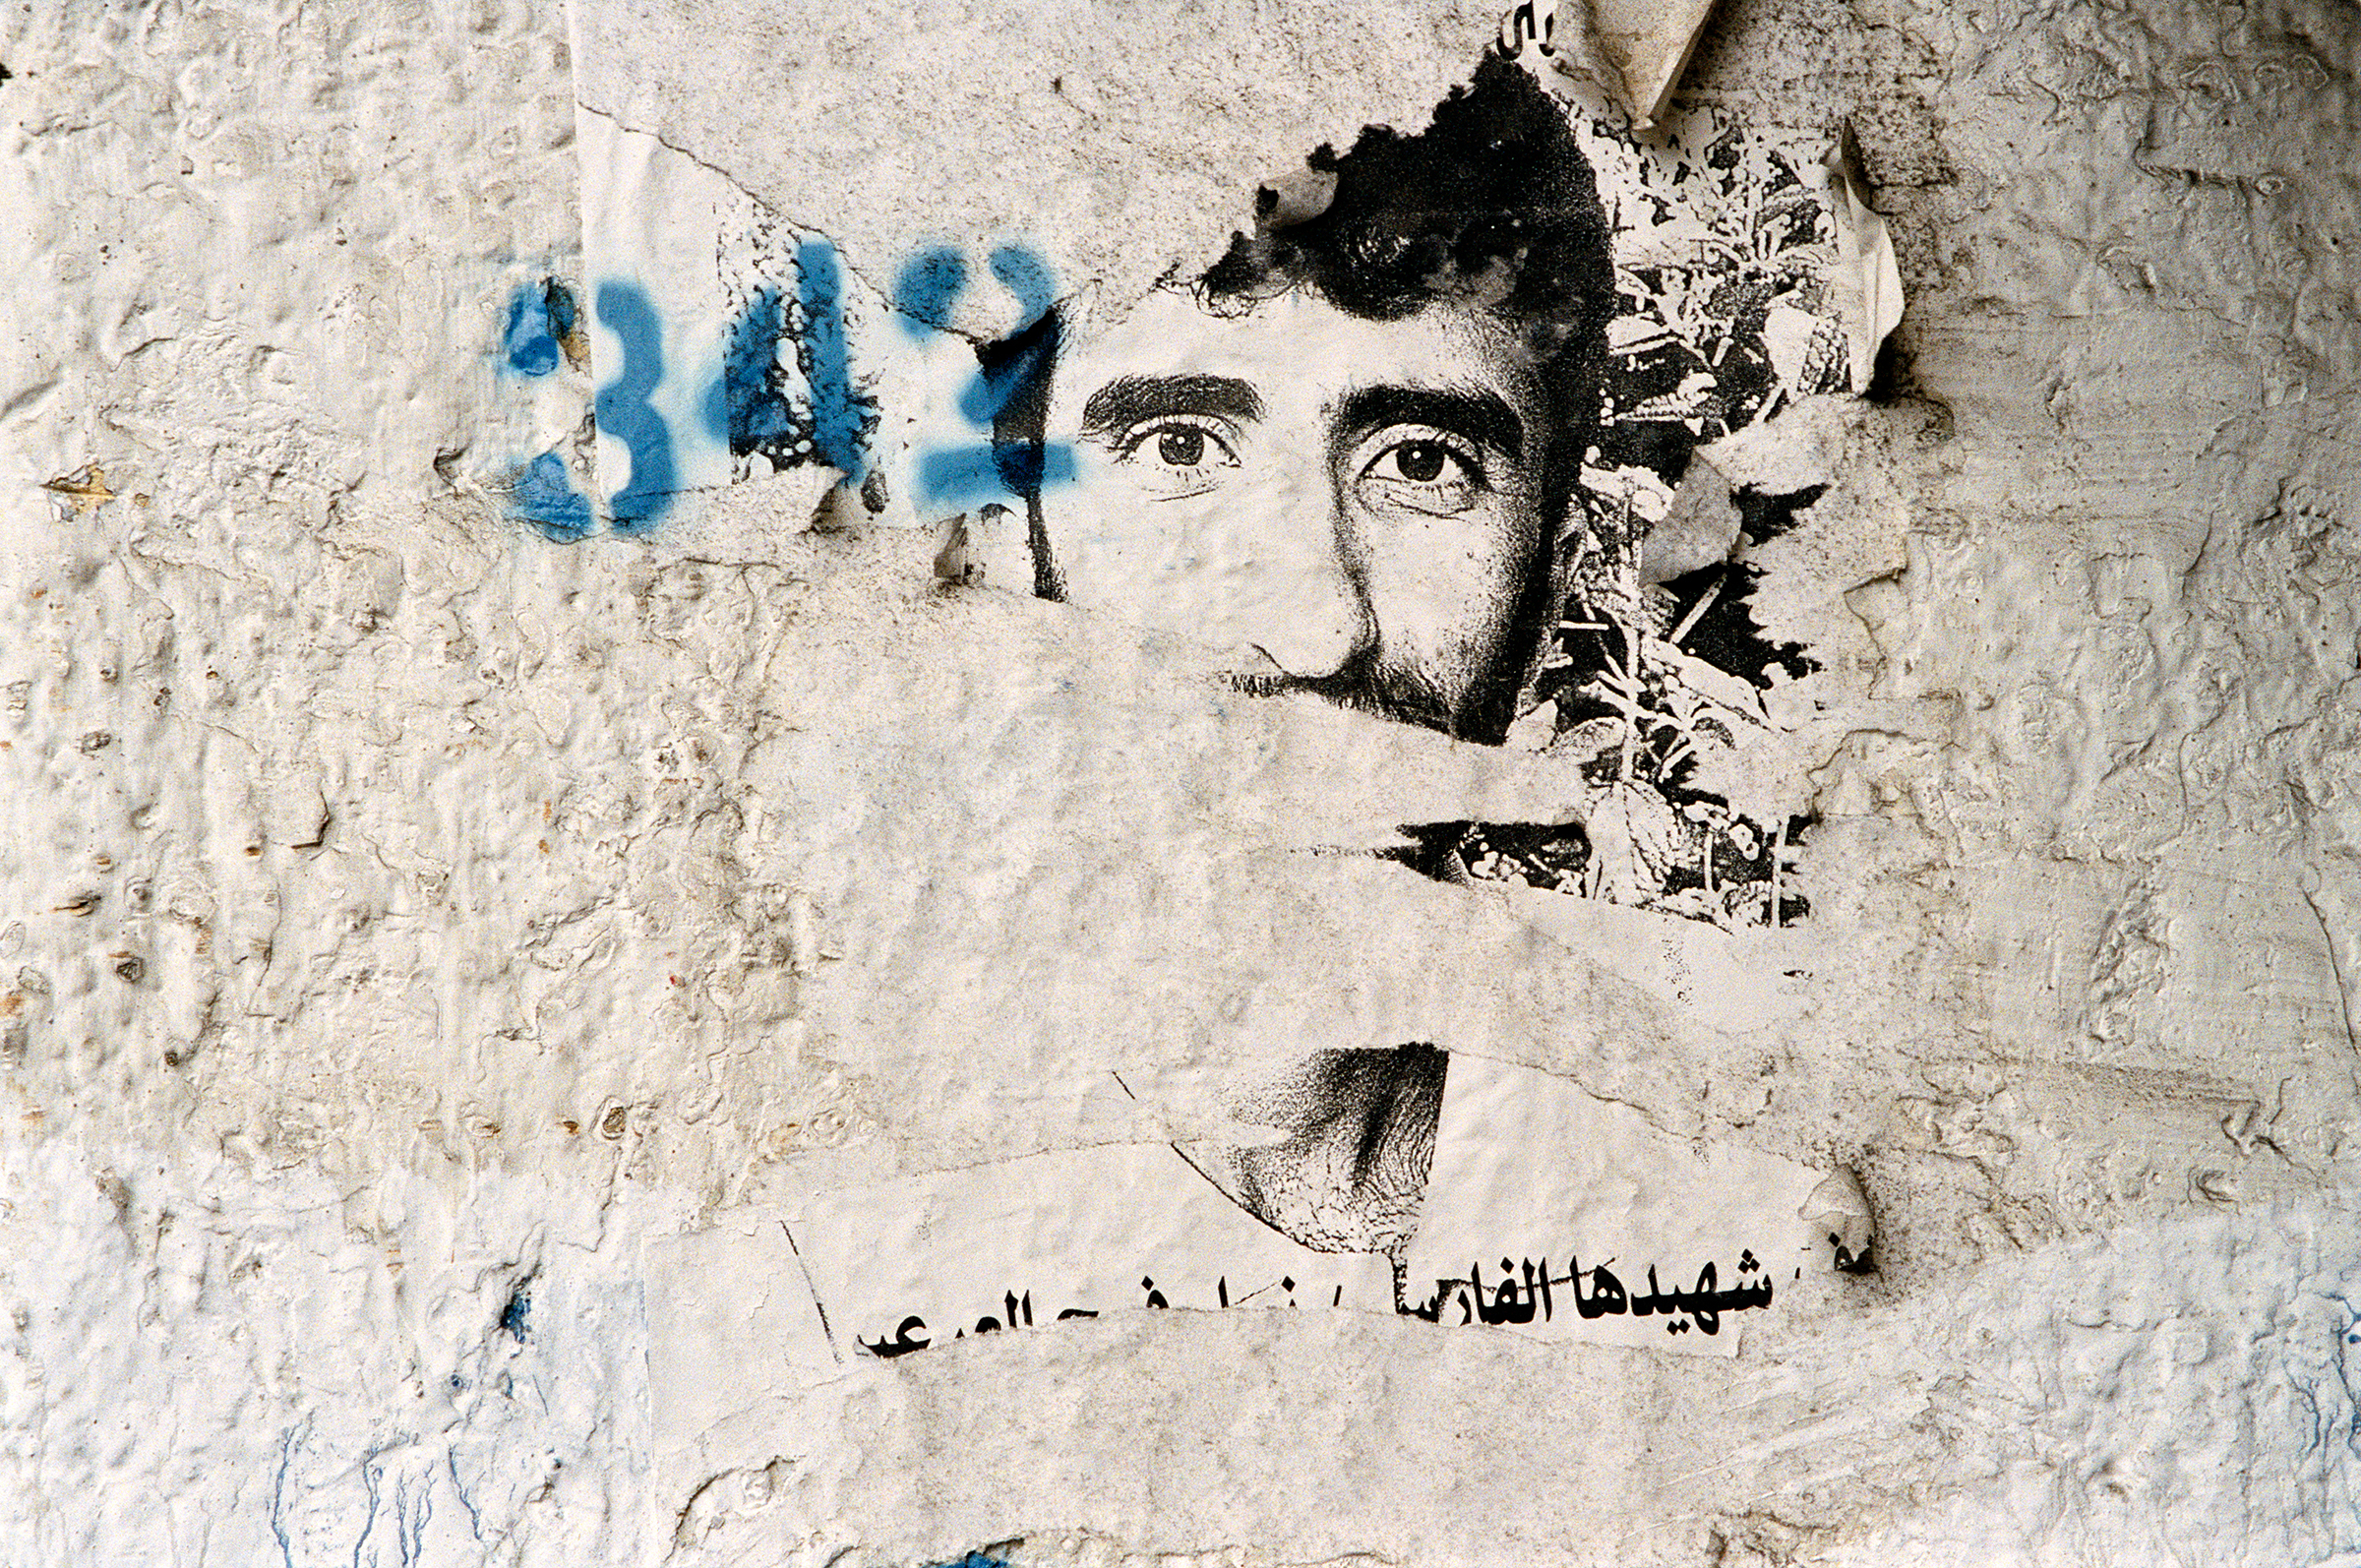     Taysir Batniji, Gaza Walls, 2001. Courtesy the artist and Galerie Sfeir-Semler (Hamburg/Beirut).

